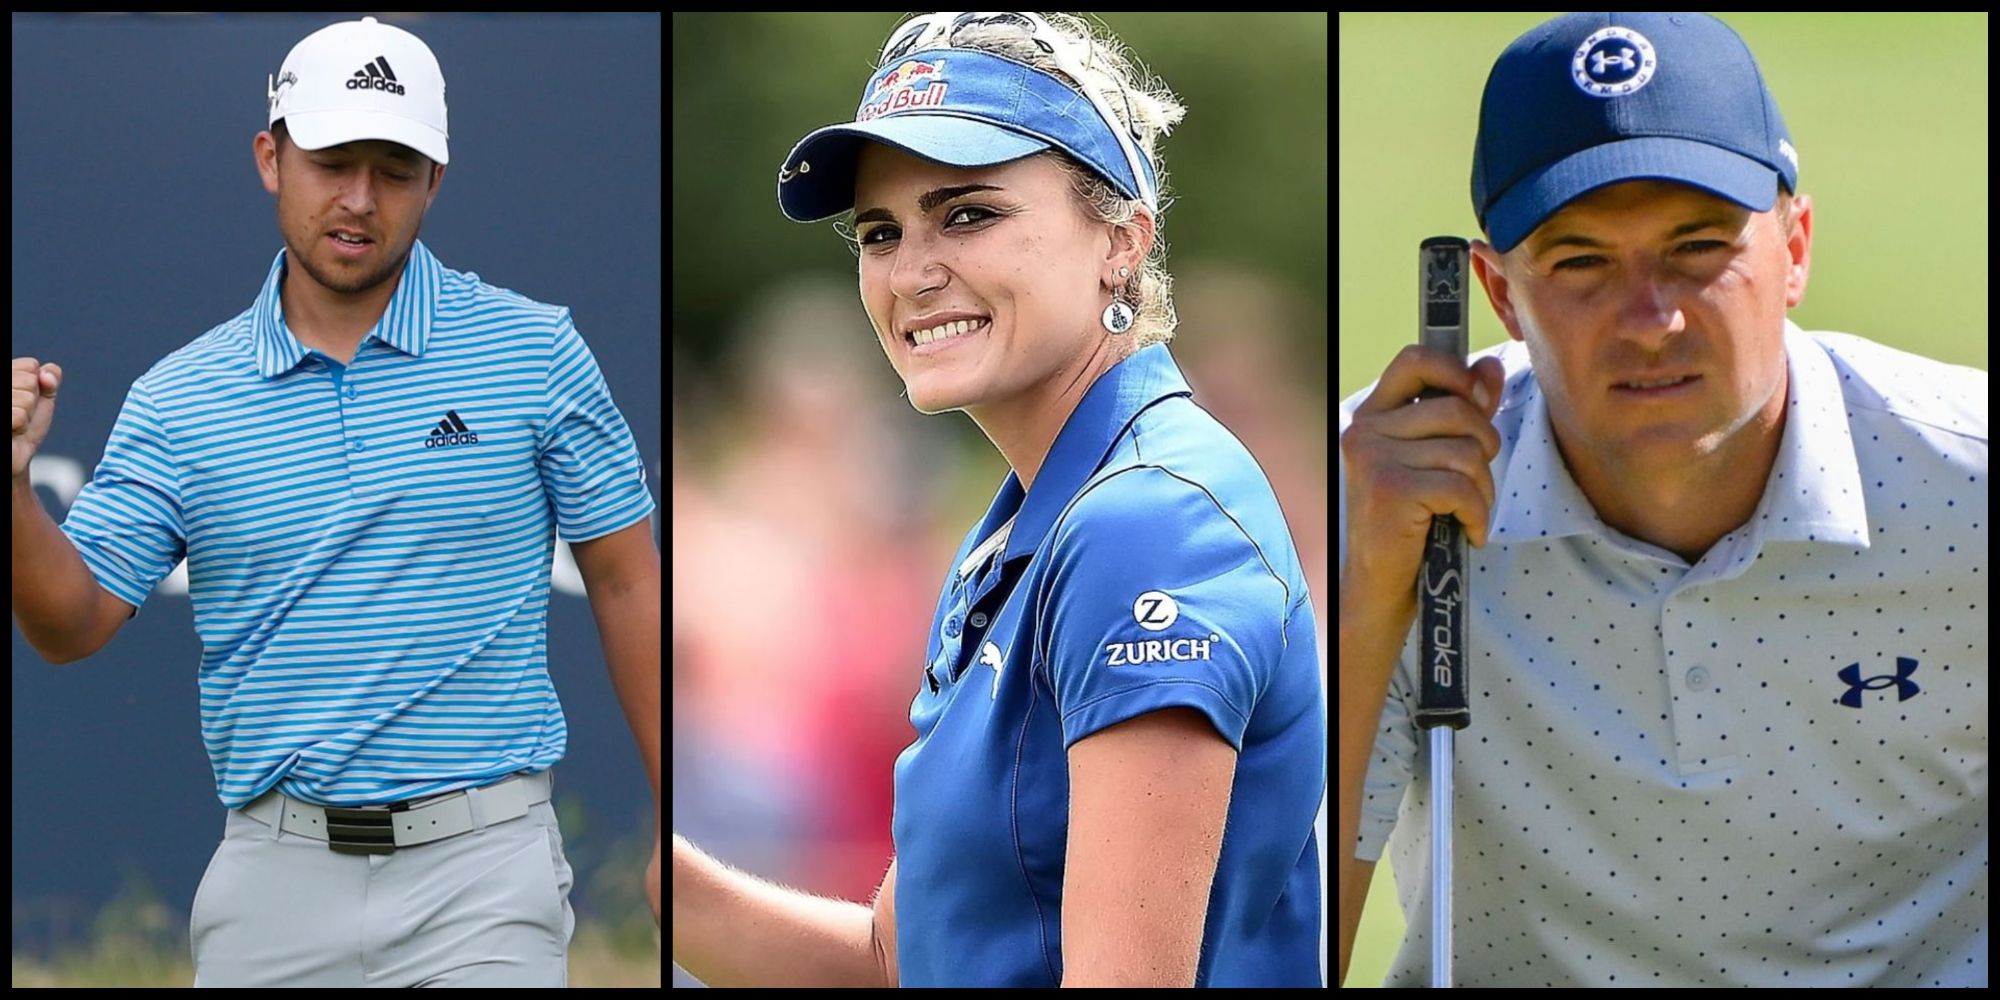 Xander Schauffele, Lexi Thompson and Jordan Spieth PGA Pro Golfers